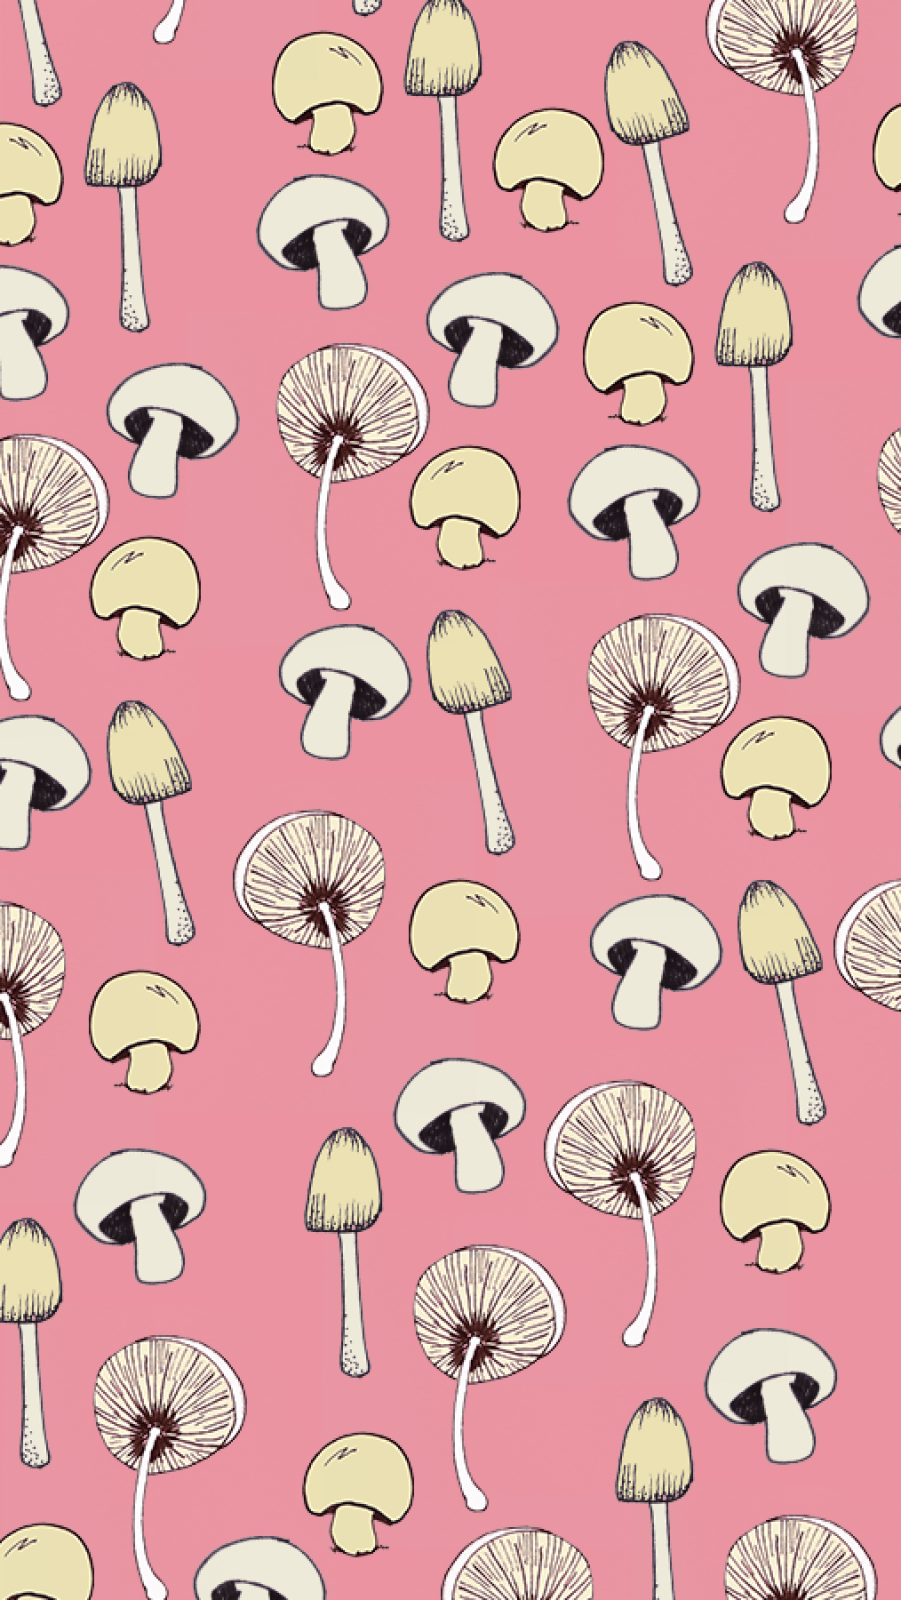 A pattern of mushrooms on pink background - Mushroom